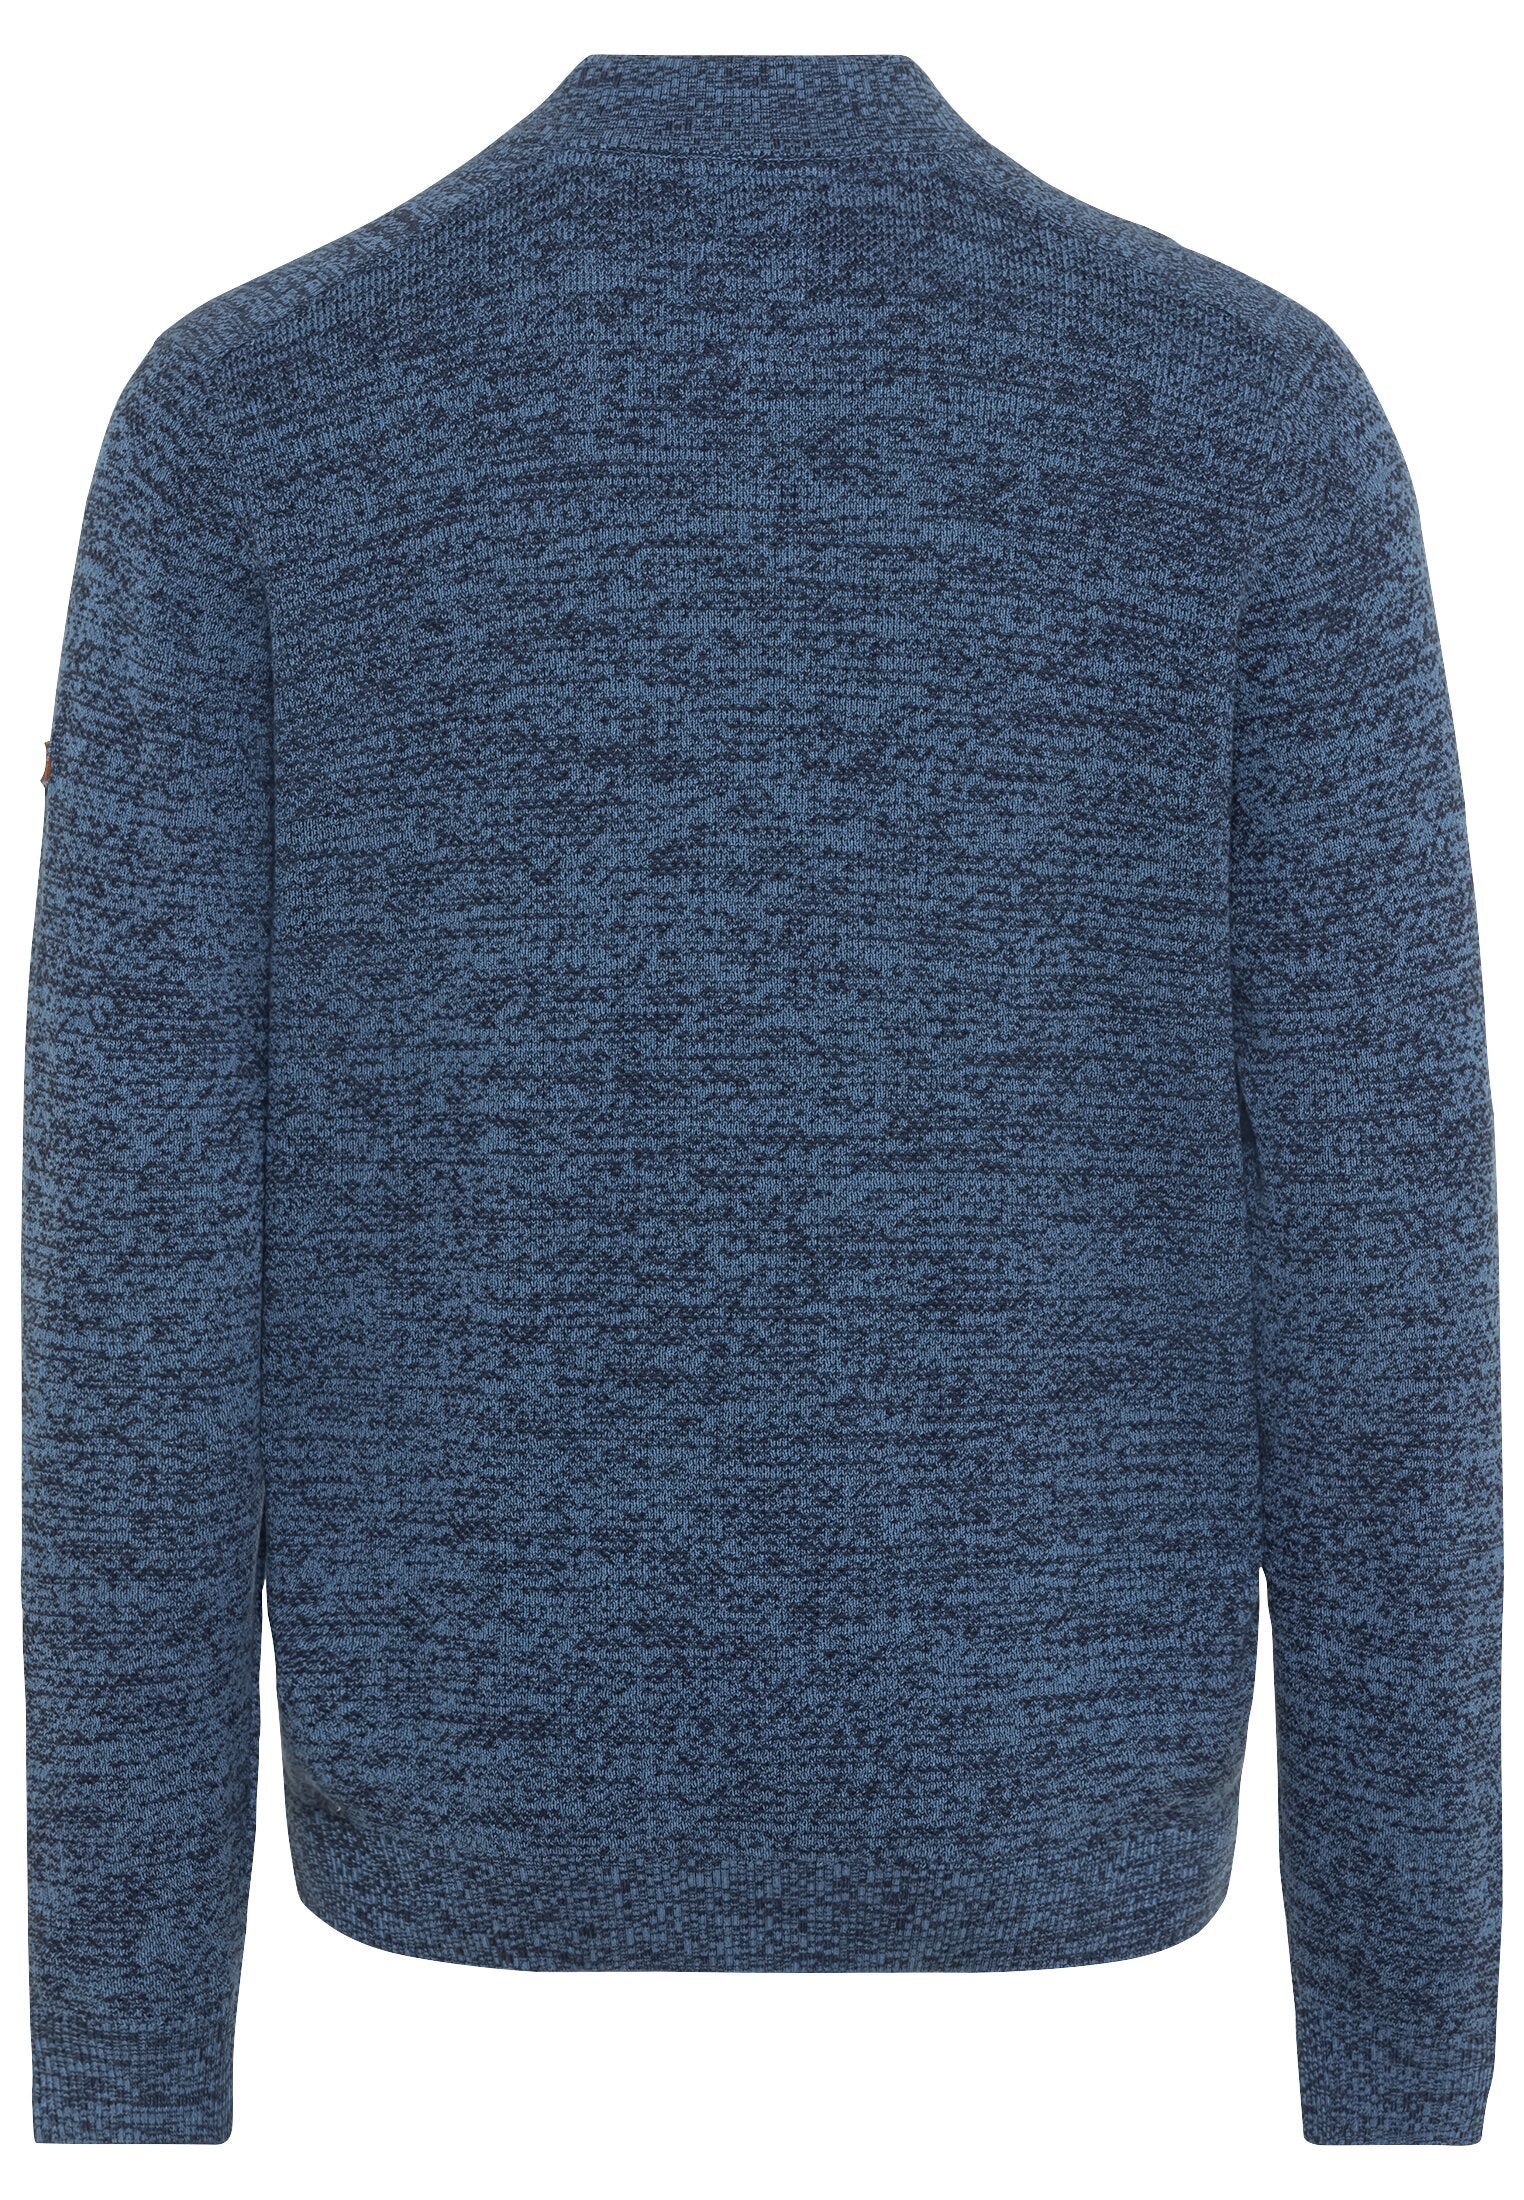 Knitted Jacket (Elemental Blue)